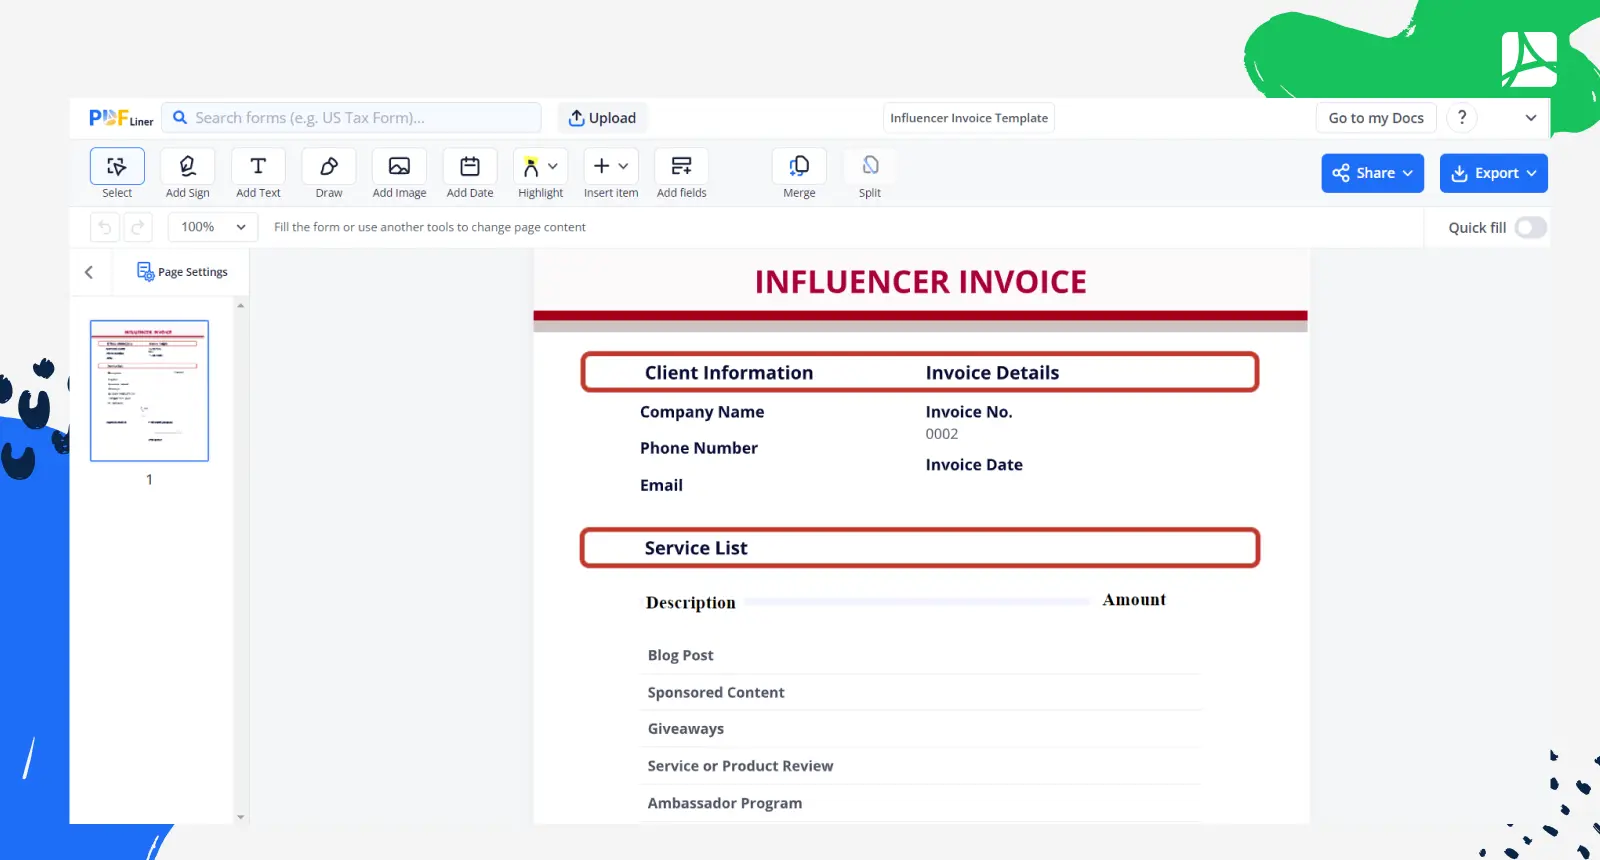 Influencer Invoice Template Screenshot